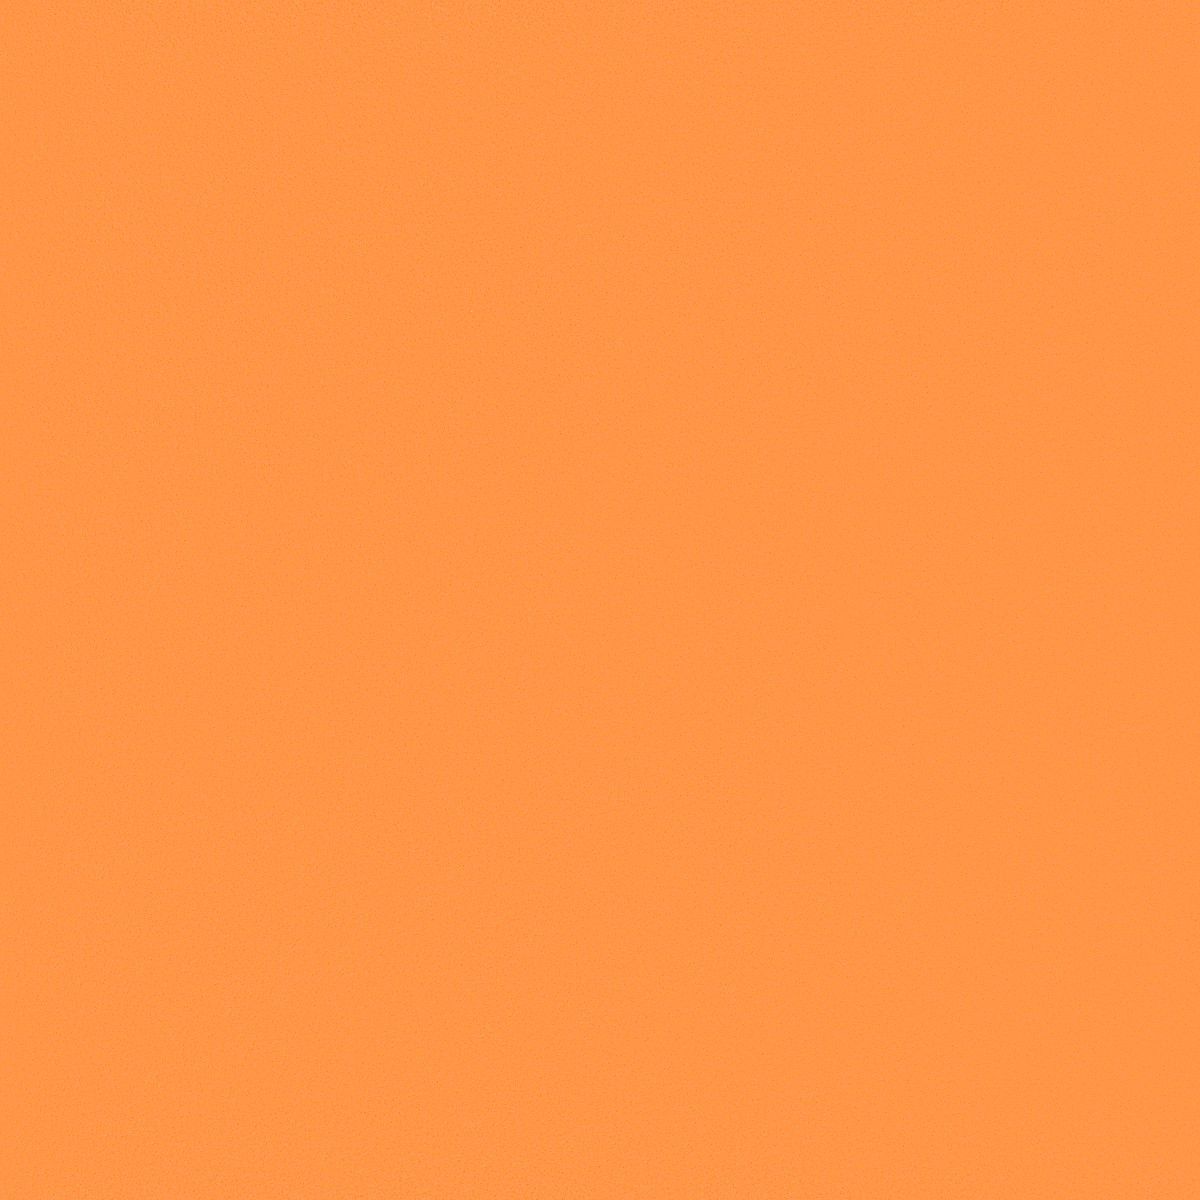 Plain Orange Wallpapers